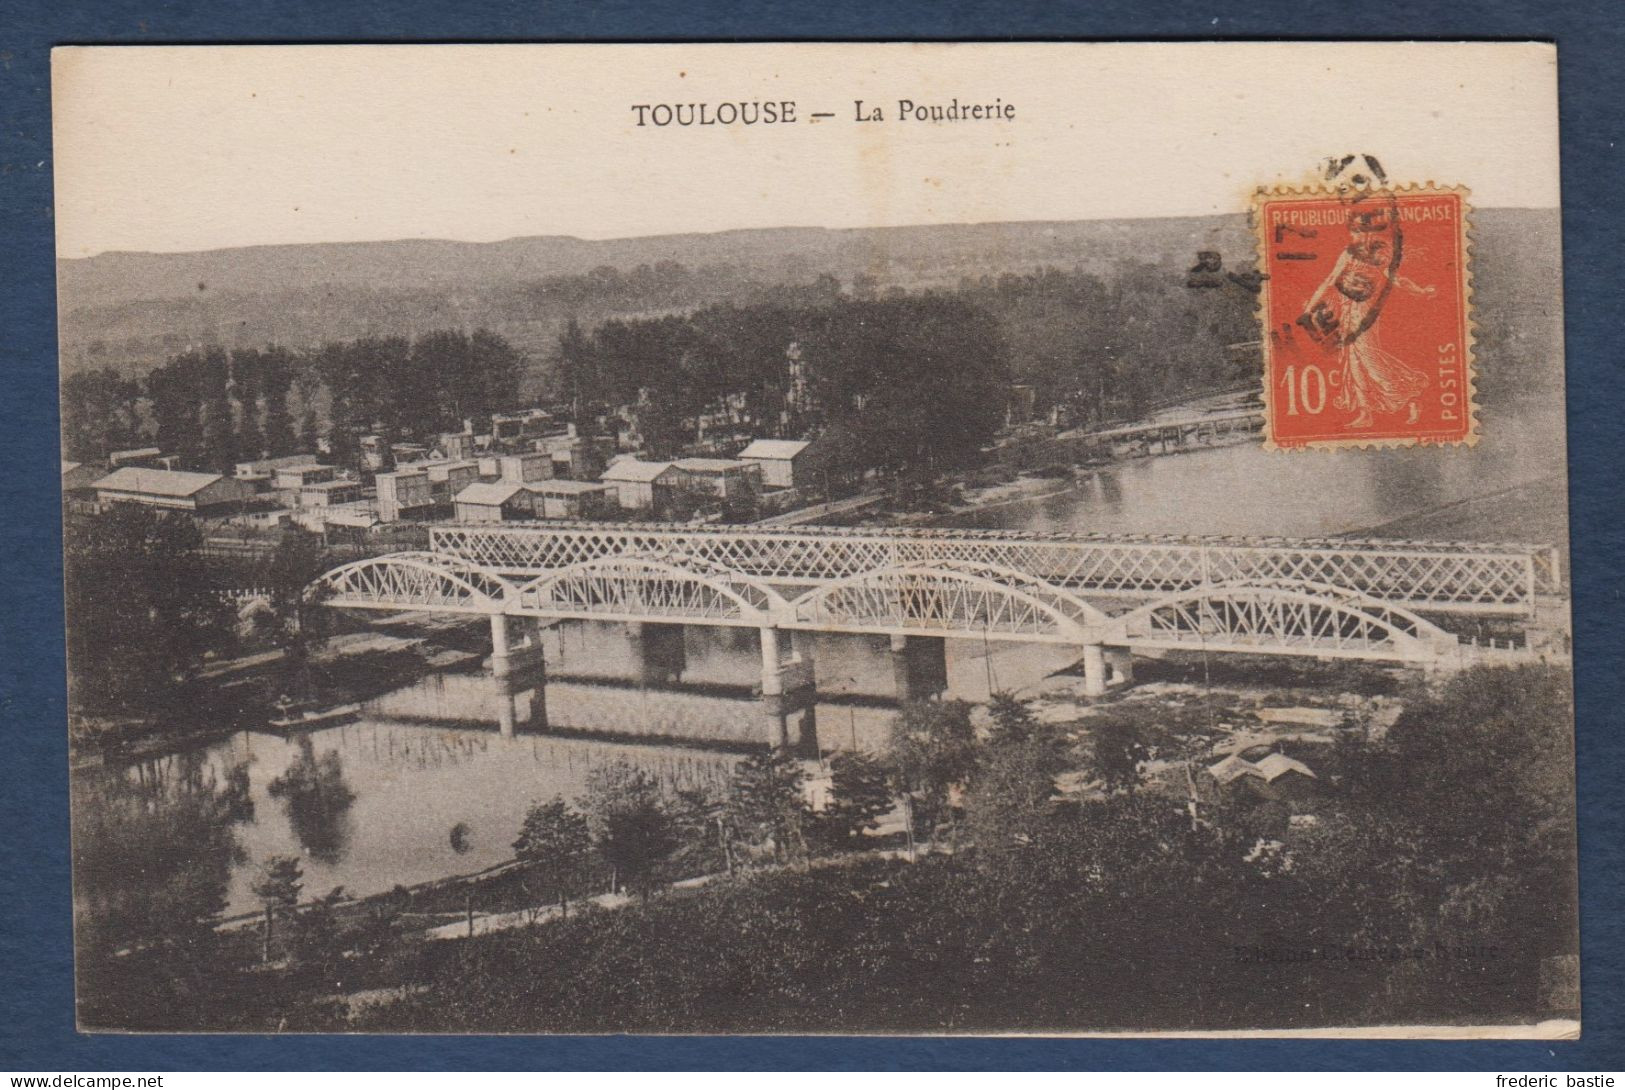 TOULOUSE - Toulouse